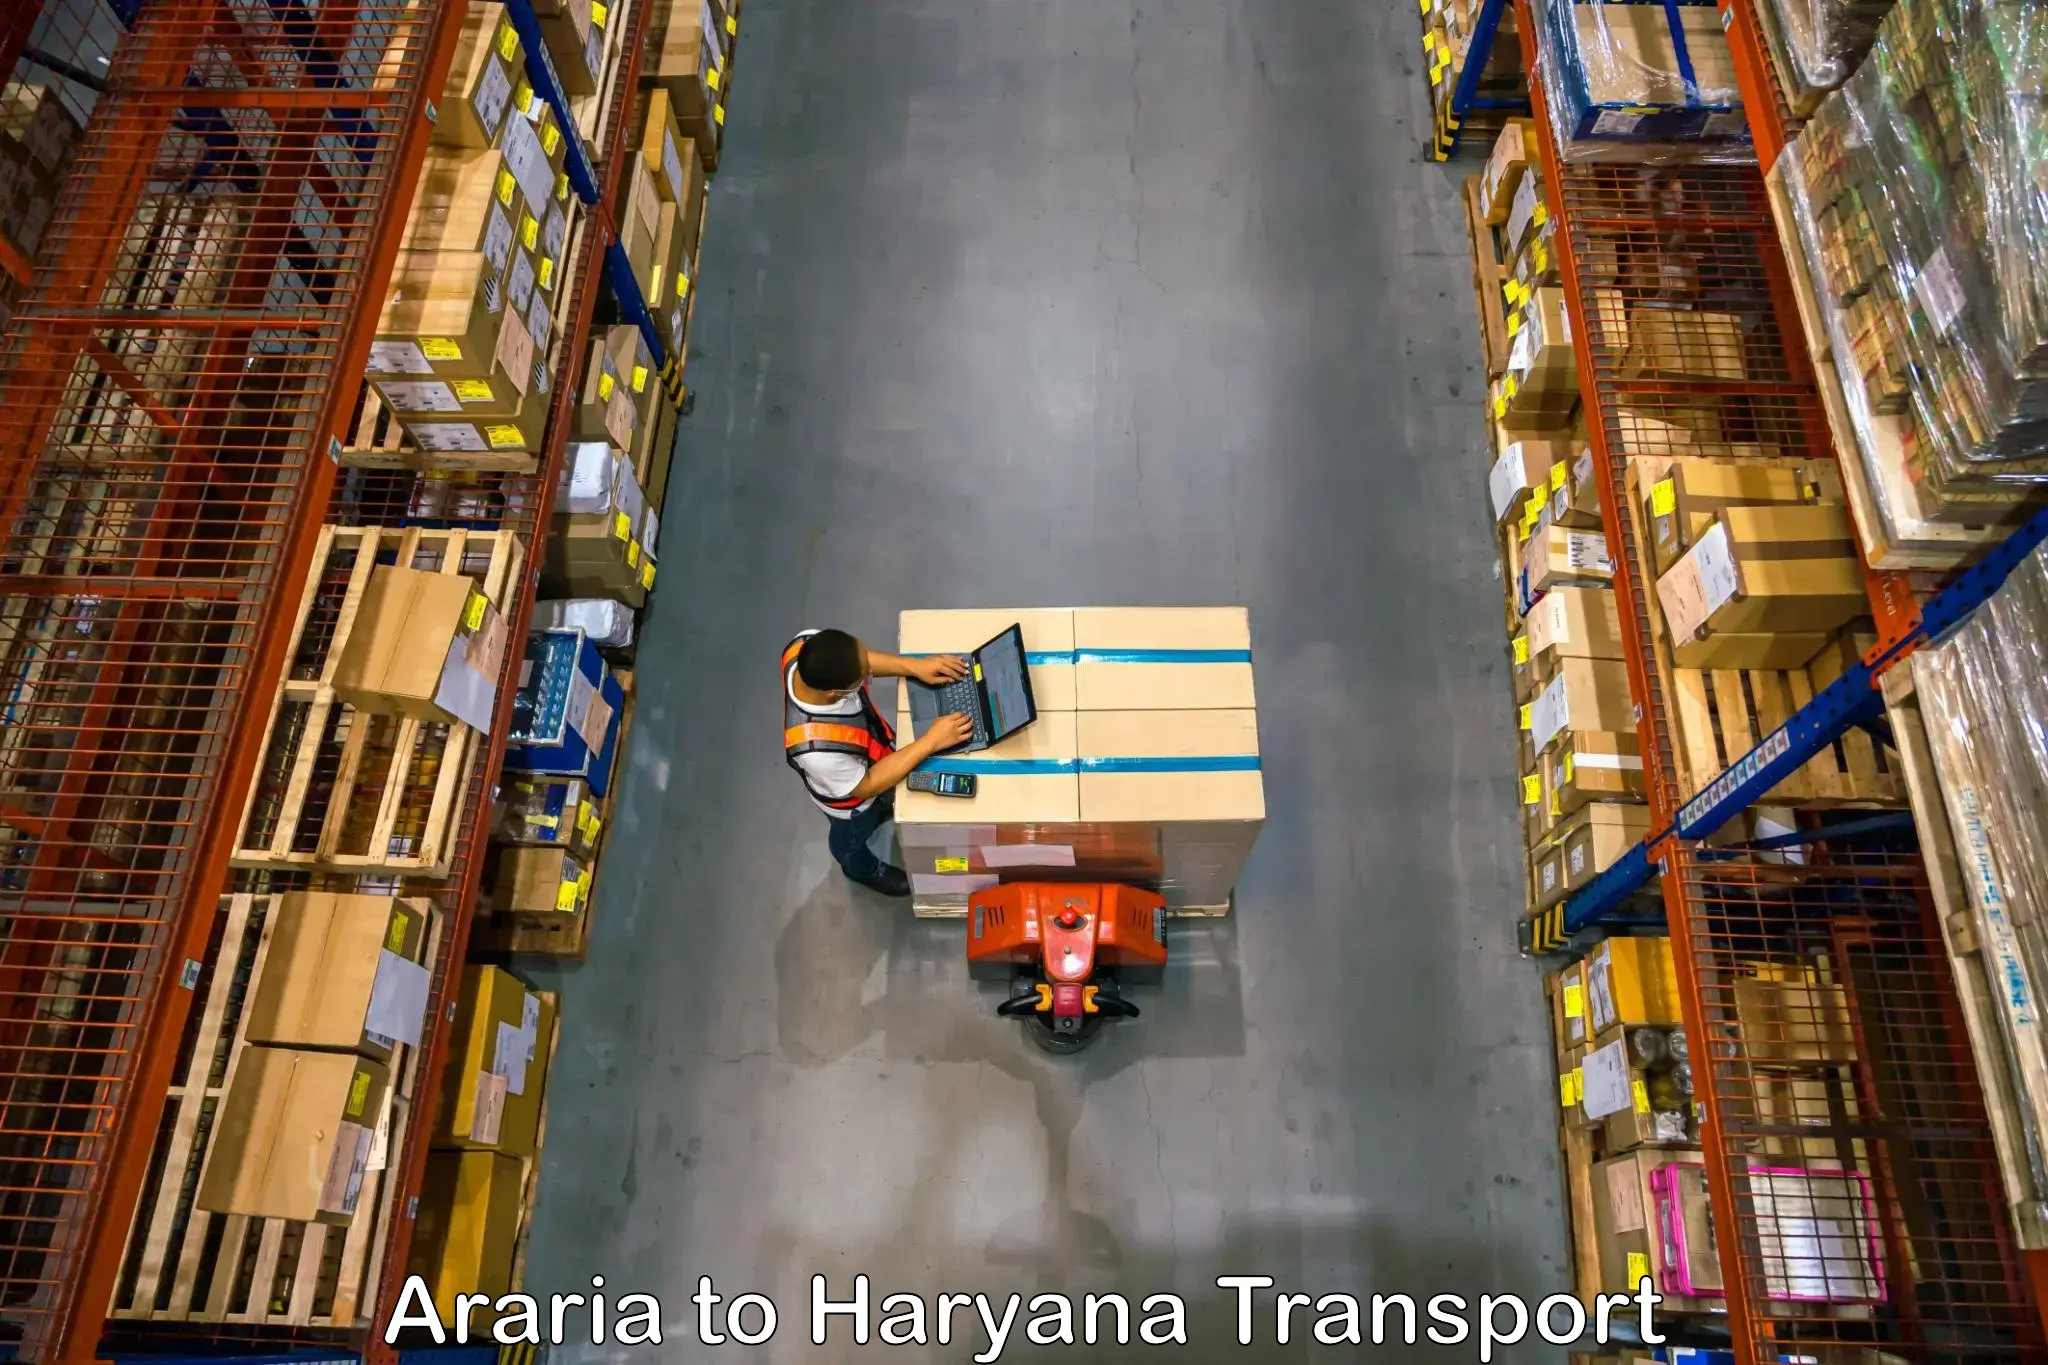 Delivery service Araria to Hansi